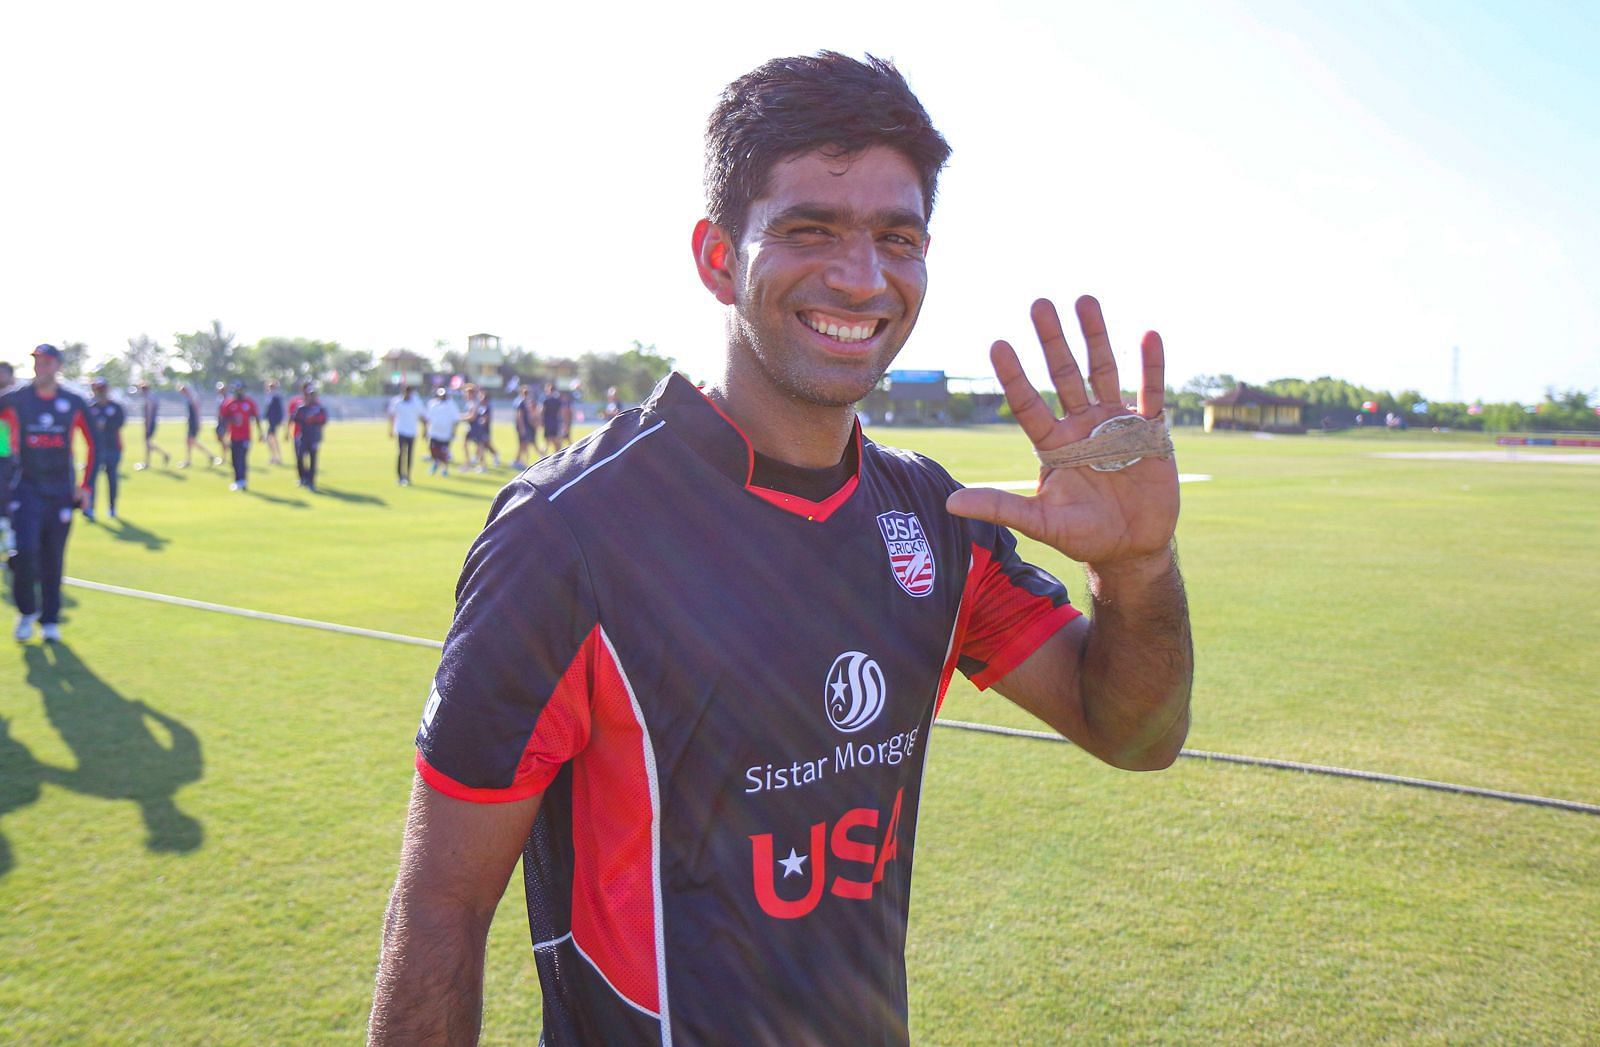 Saurabh Netravalkar of the USA. (Image Credits: USA Cricket)